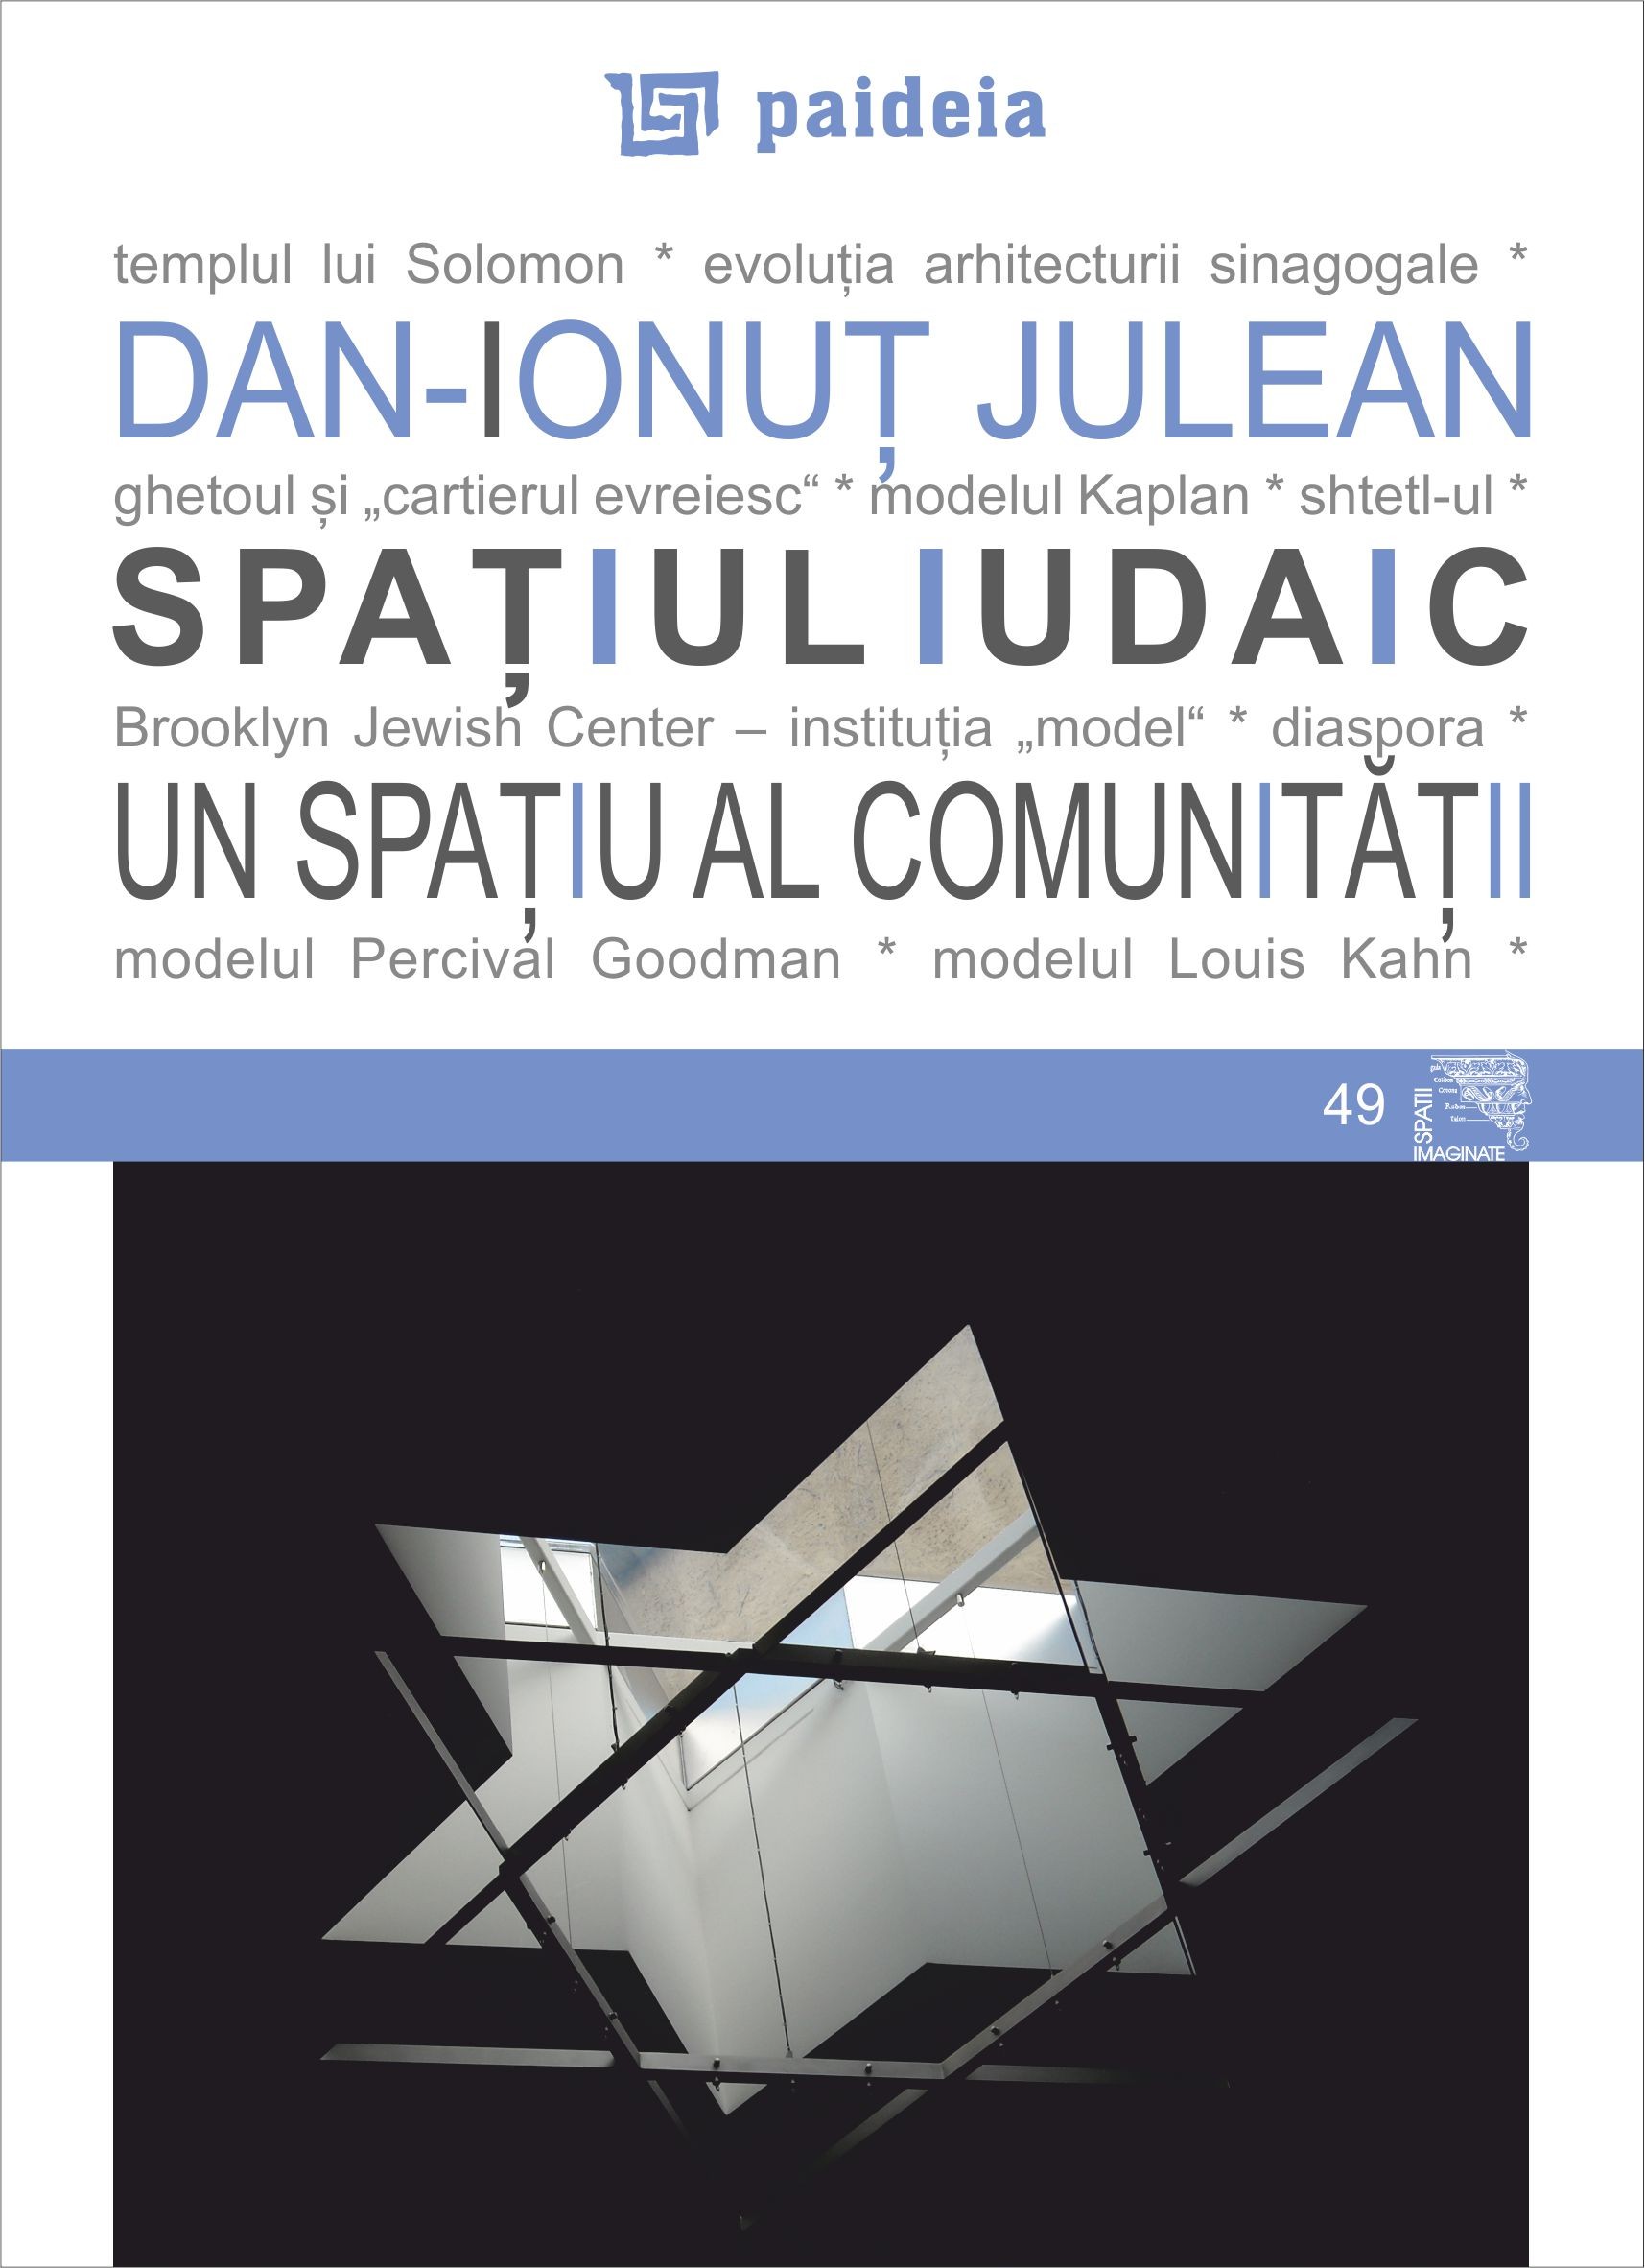 Spatiul iudaic, un spatiu al comunitatii - Dan-Ionut Julean